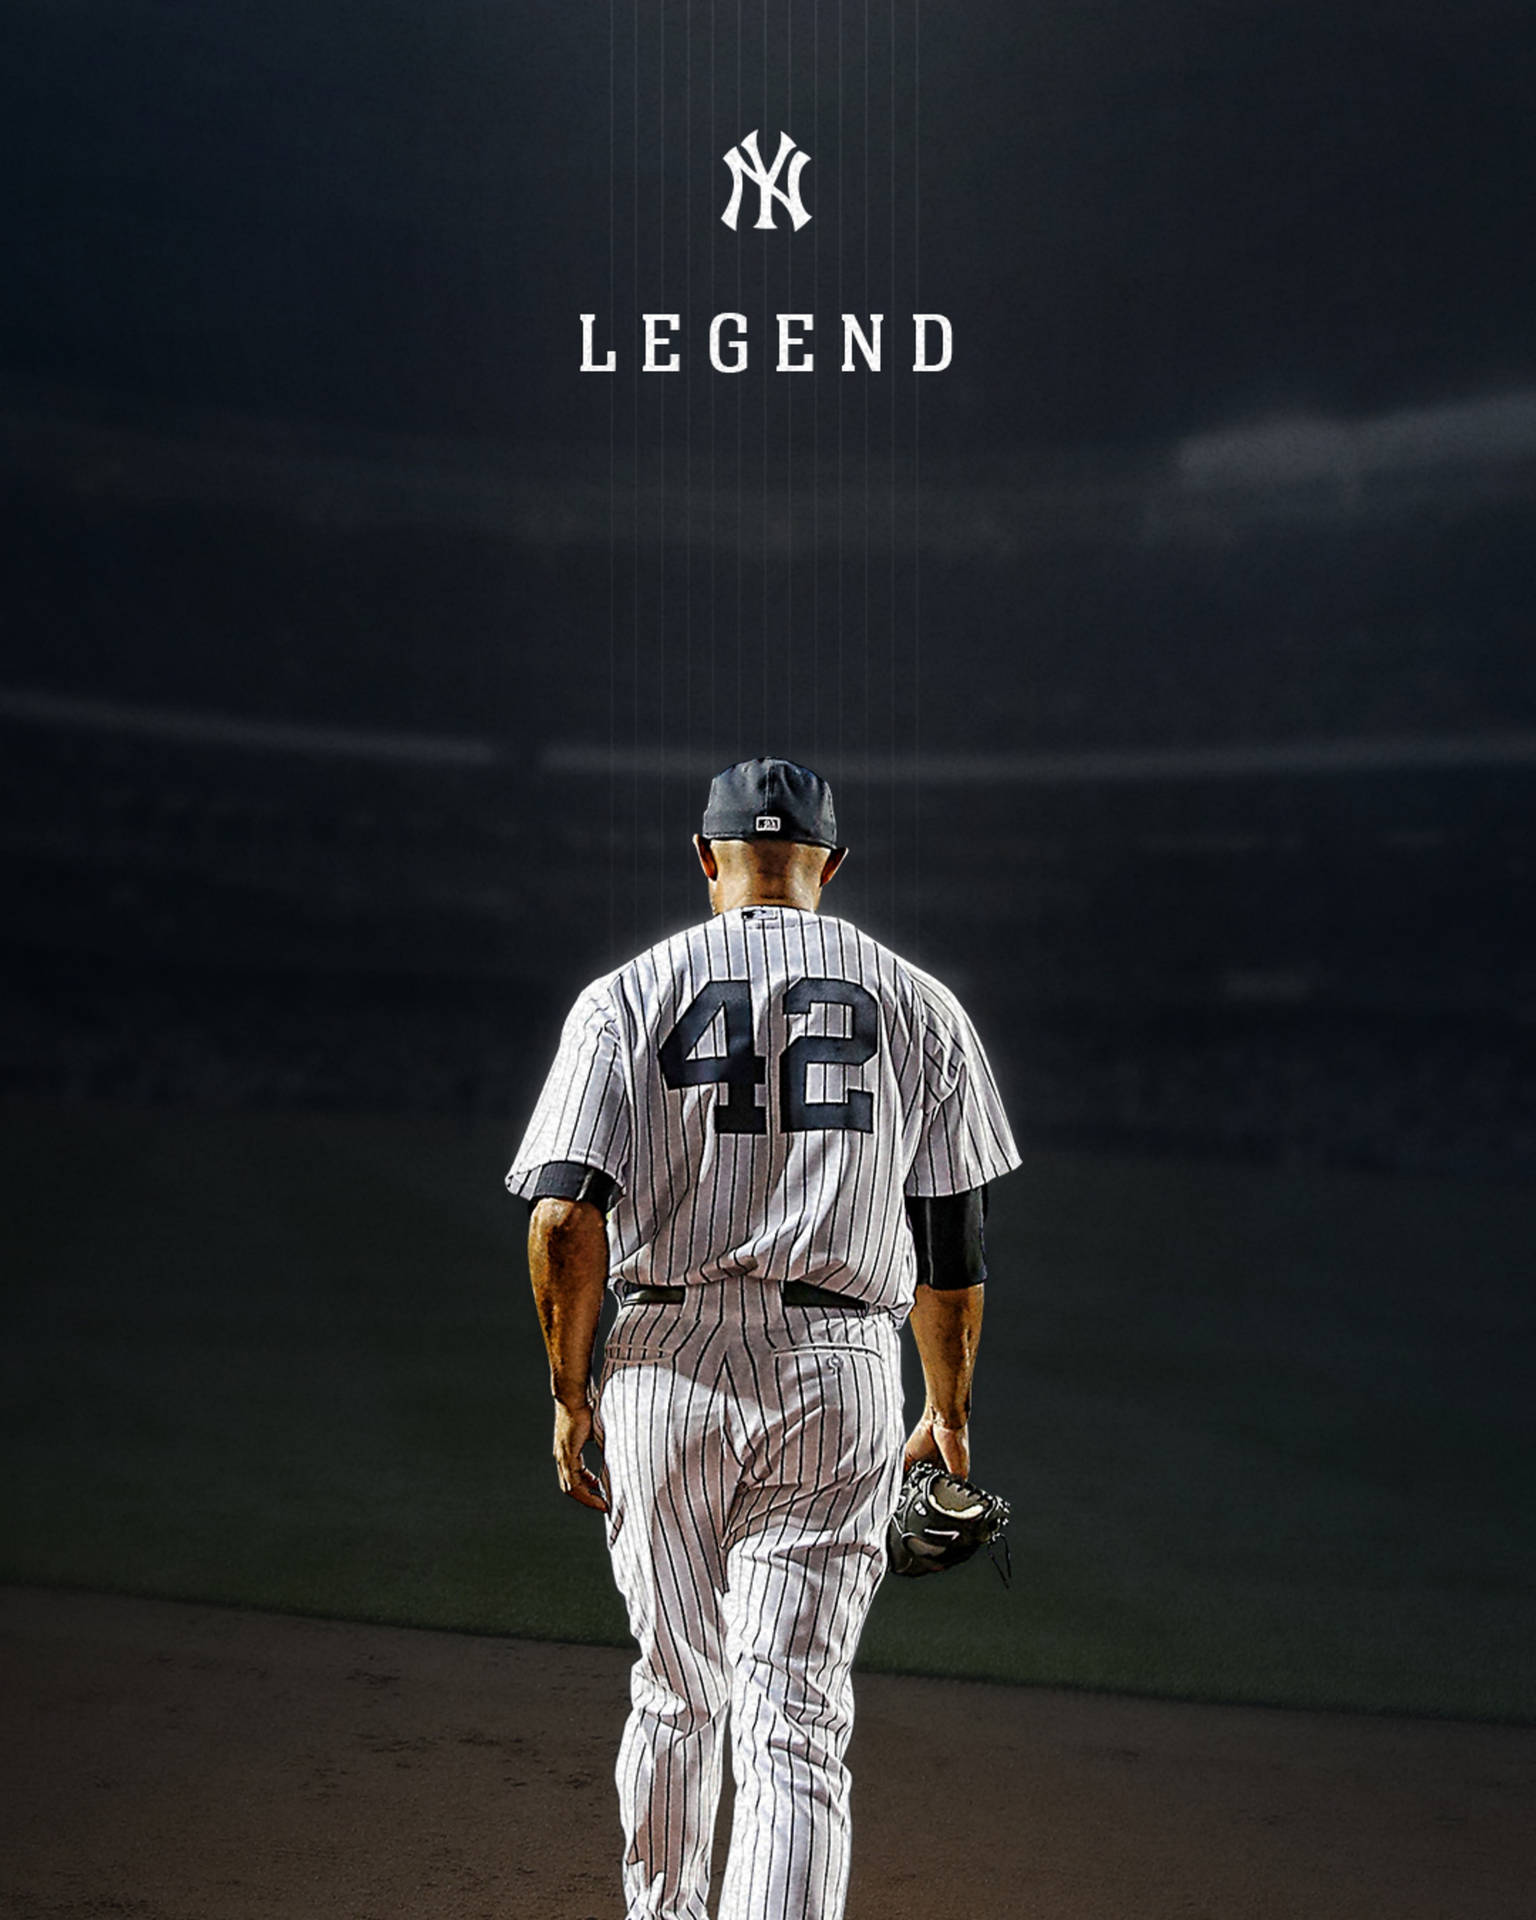 Yankeesmariano Rivera Legende. Wallpaper